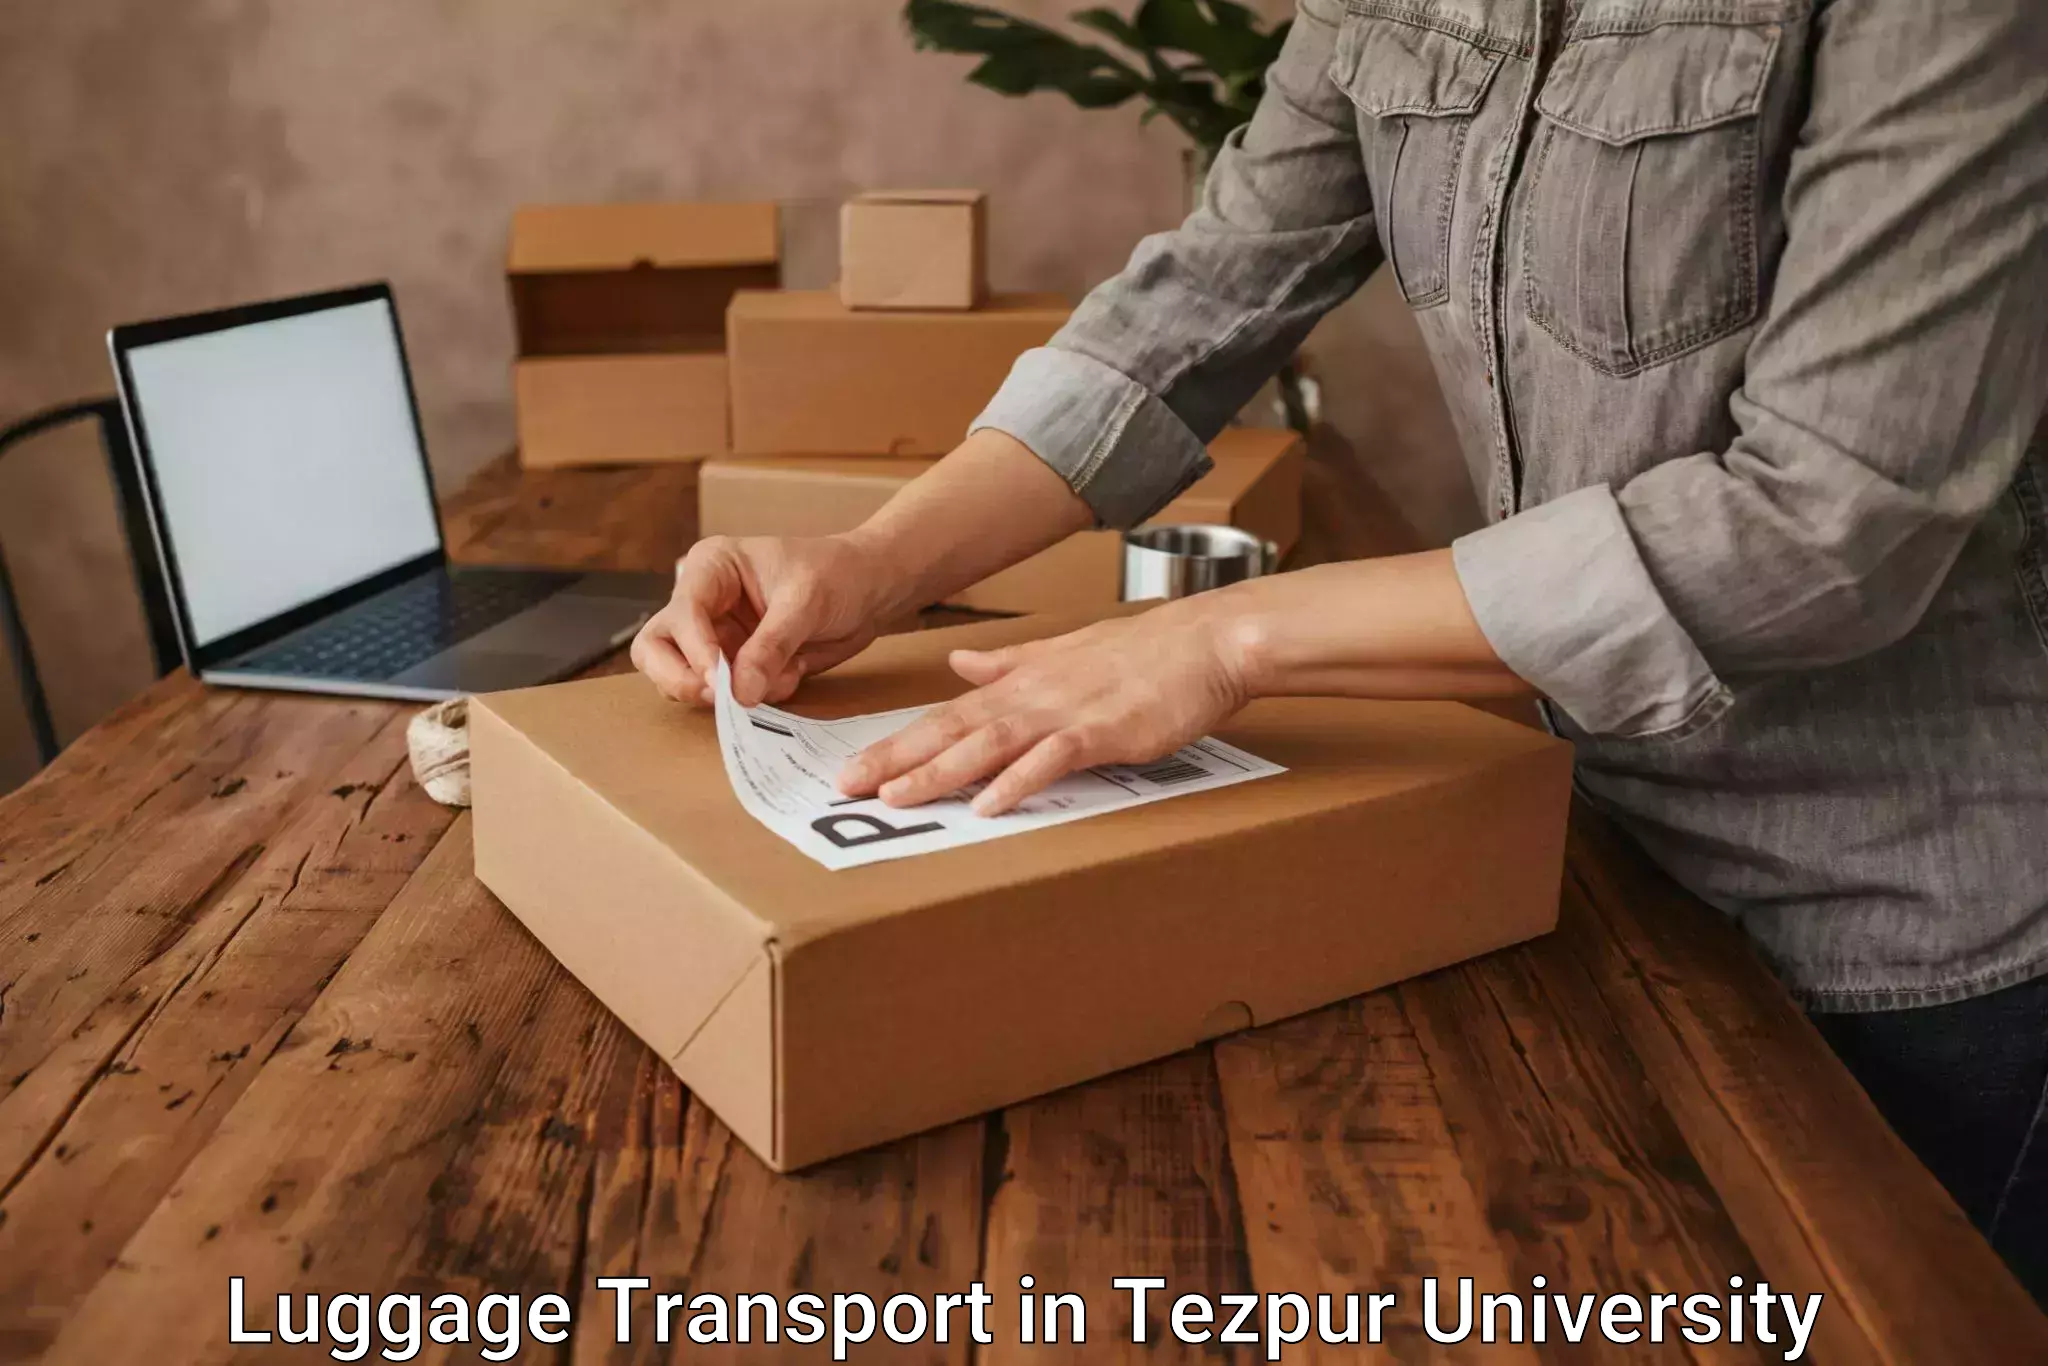 Regional luggage transport in Tezpur University